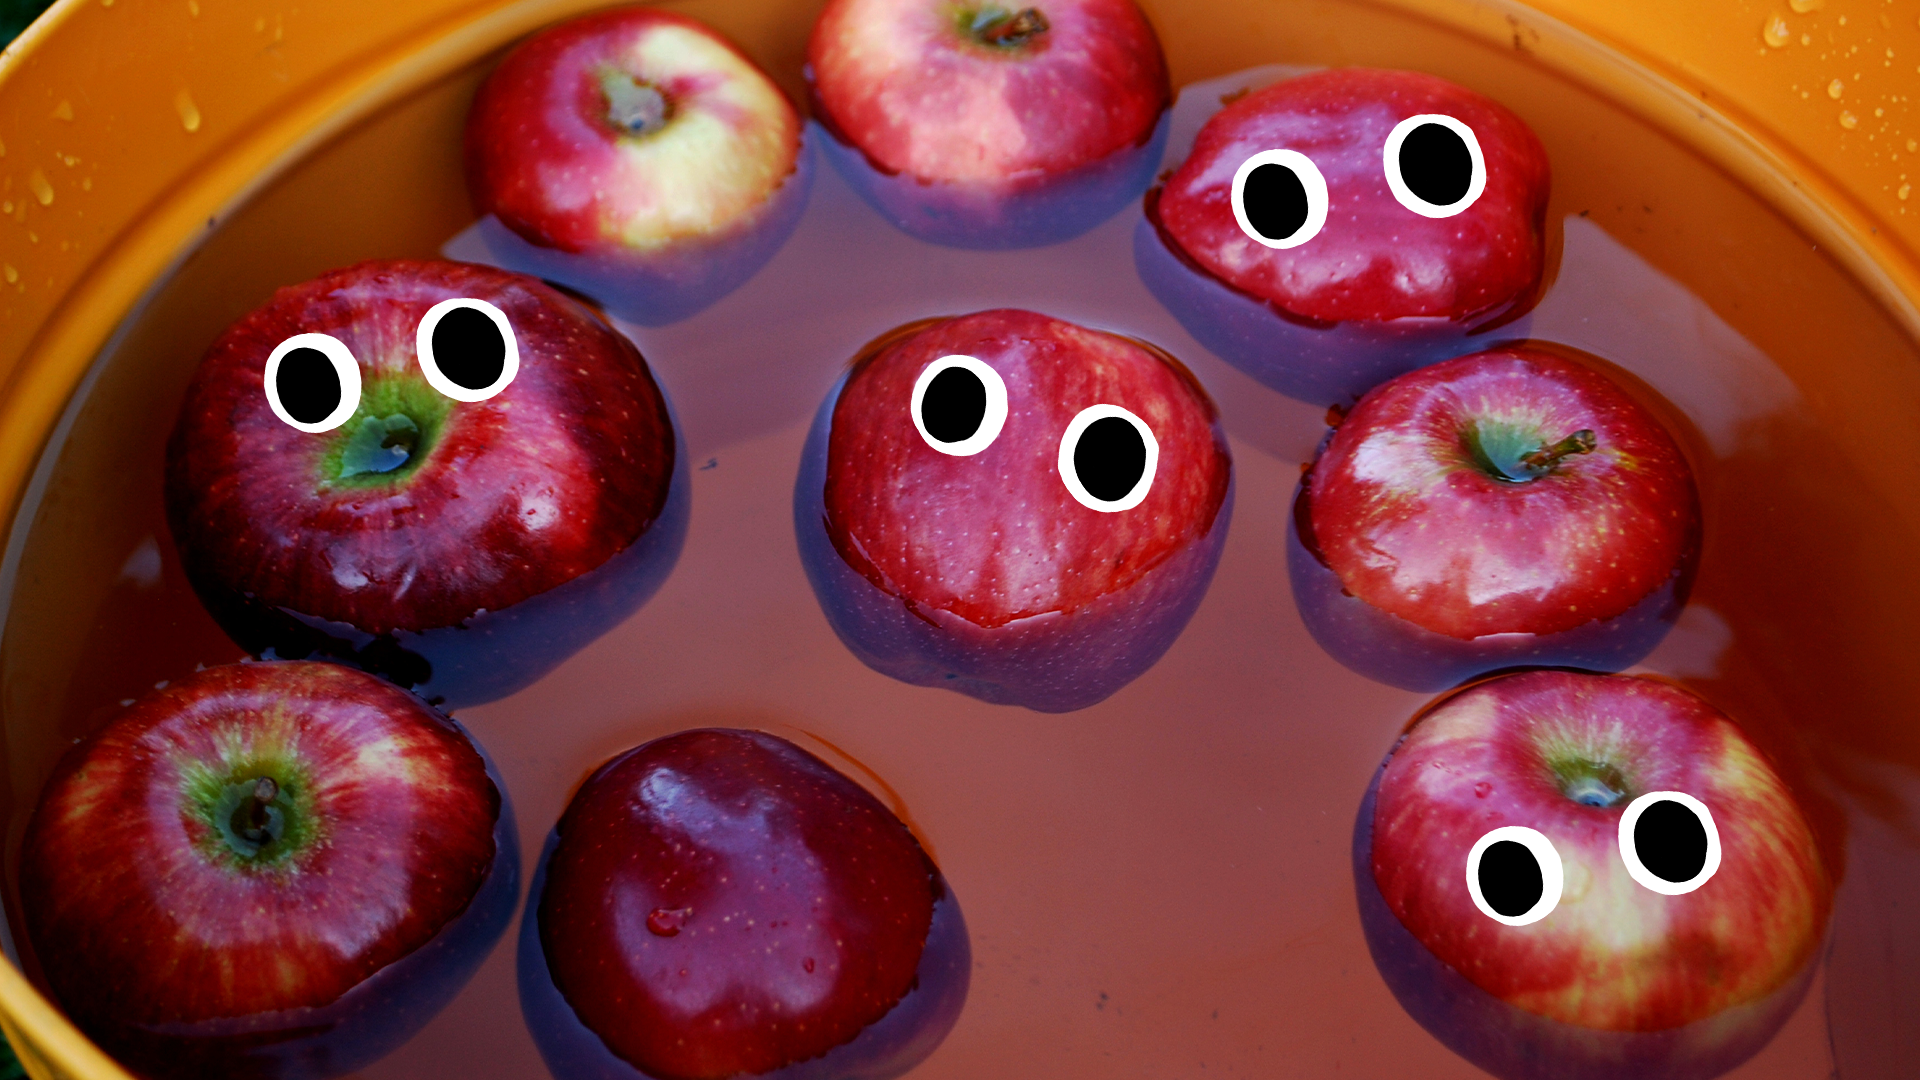 Bobbing apples with goofy eyes